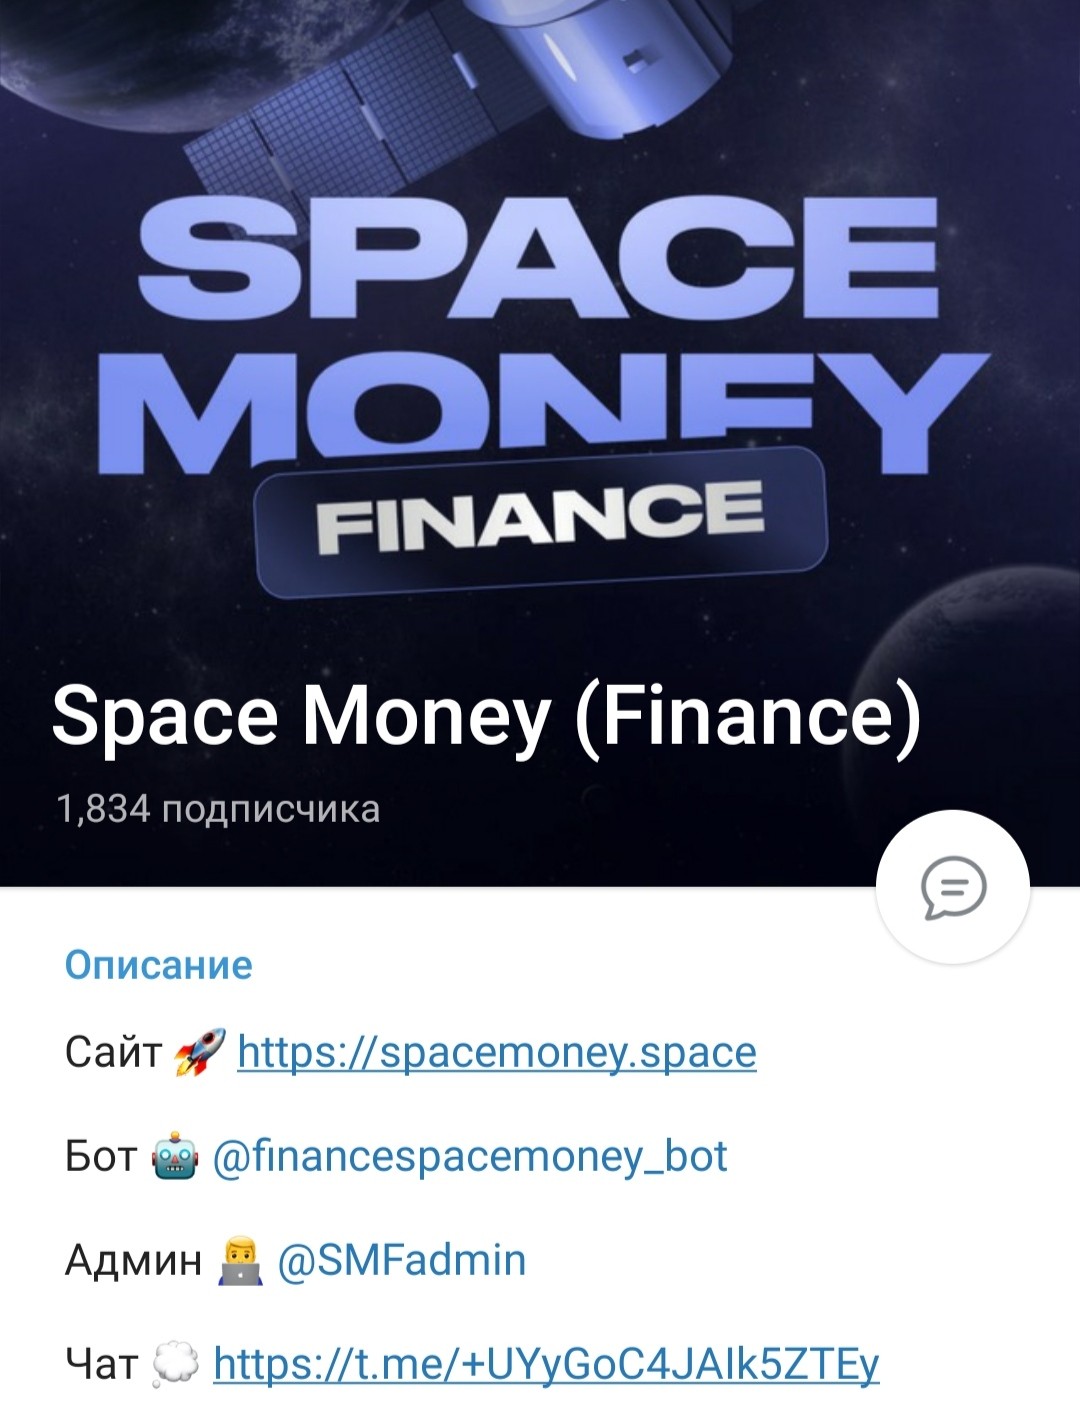 Space Money Finance телеграм